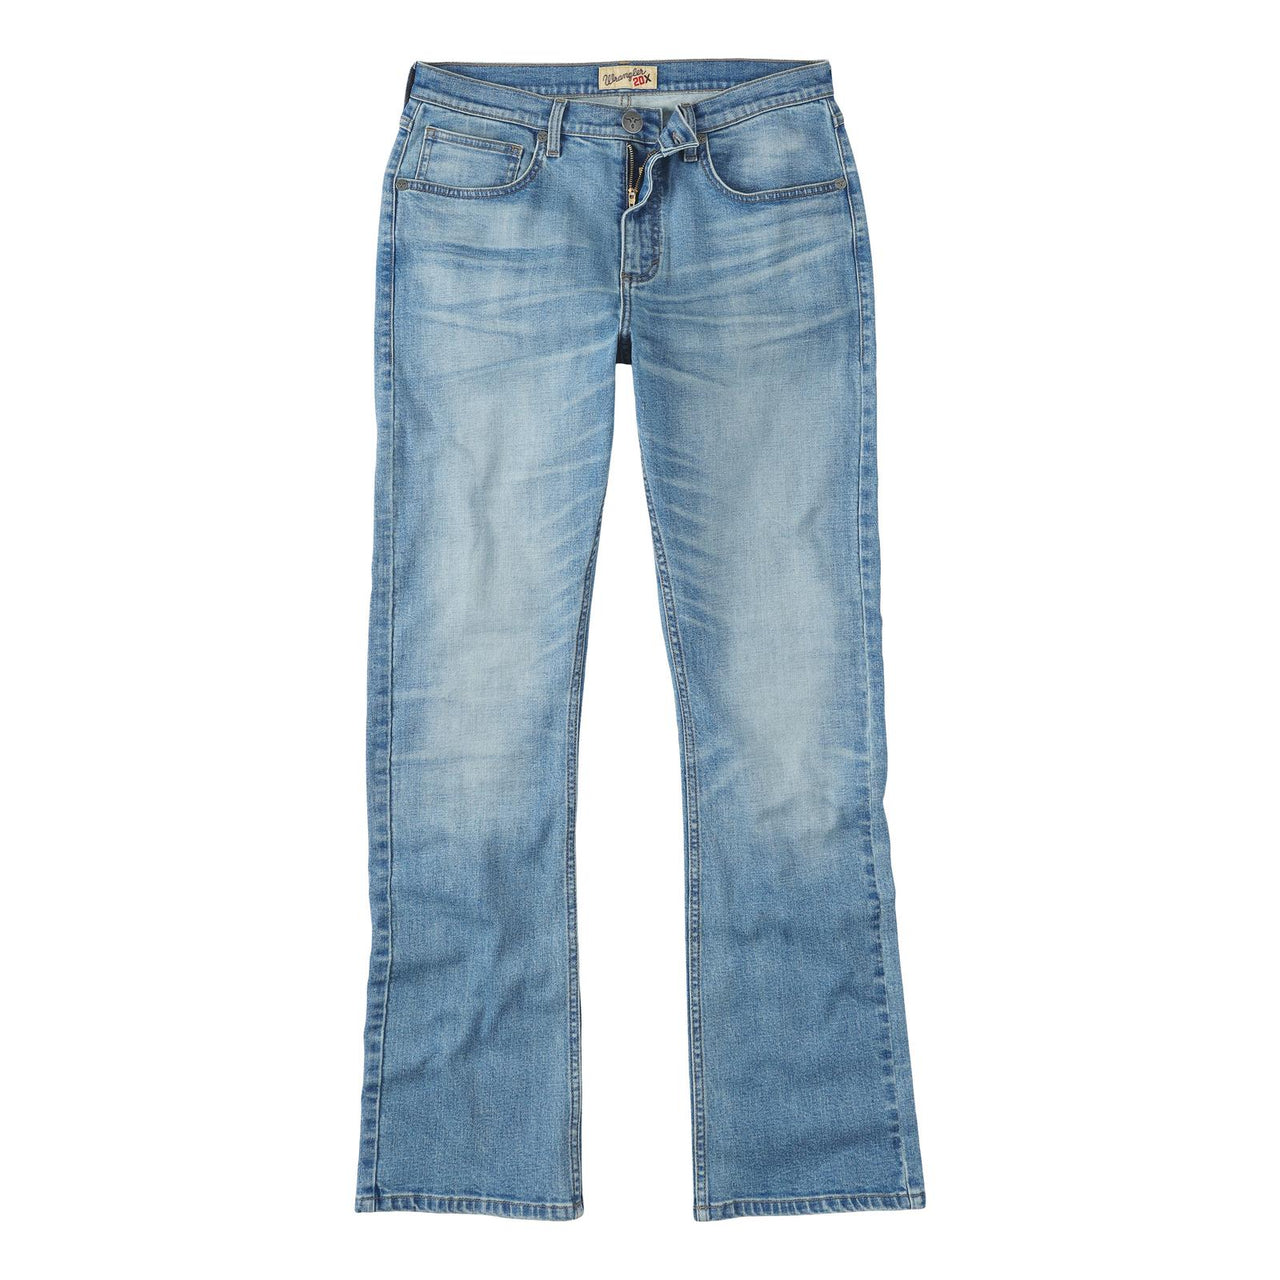 Wrangler Men's 20X Vintage Boot Cut Jeans - Shade